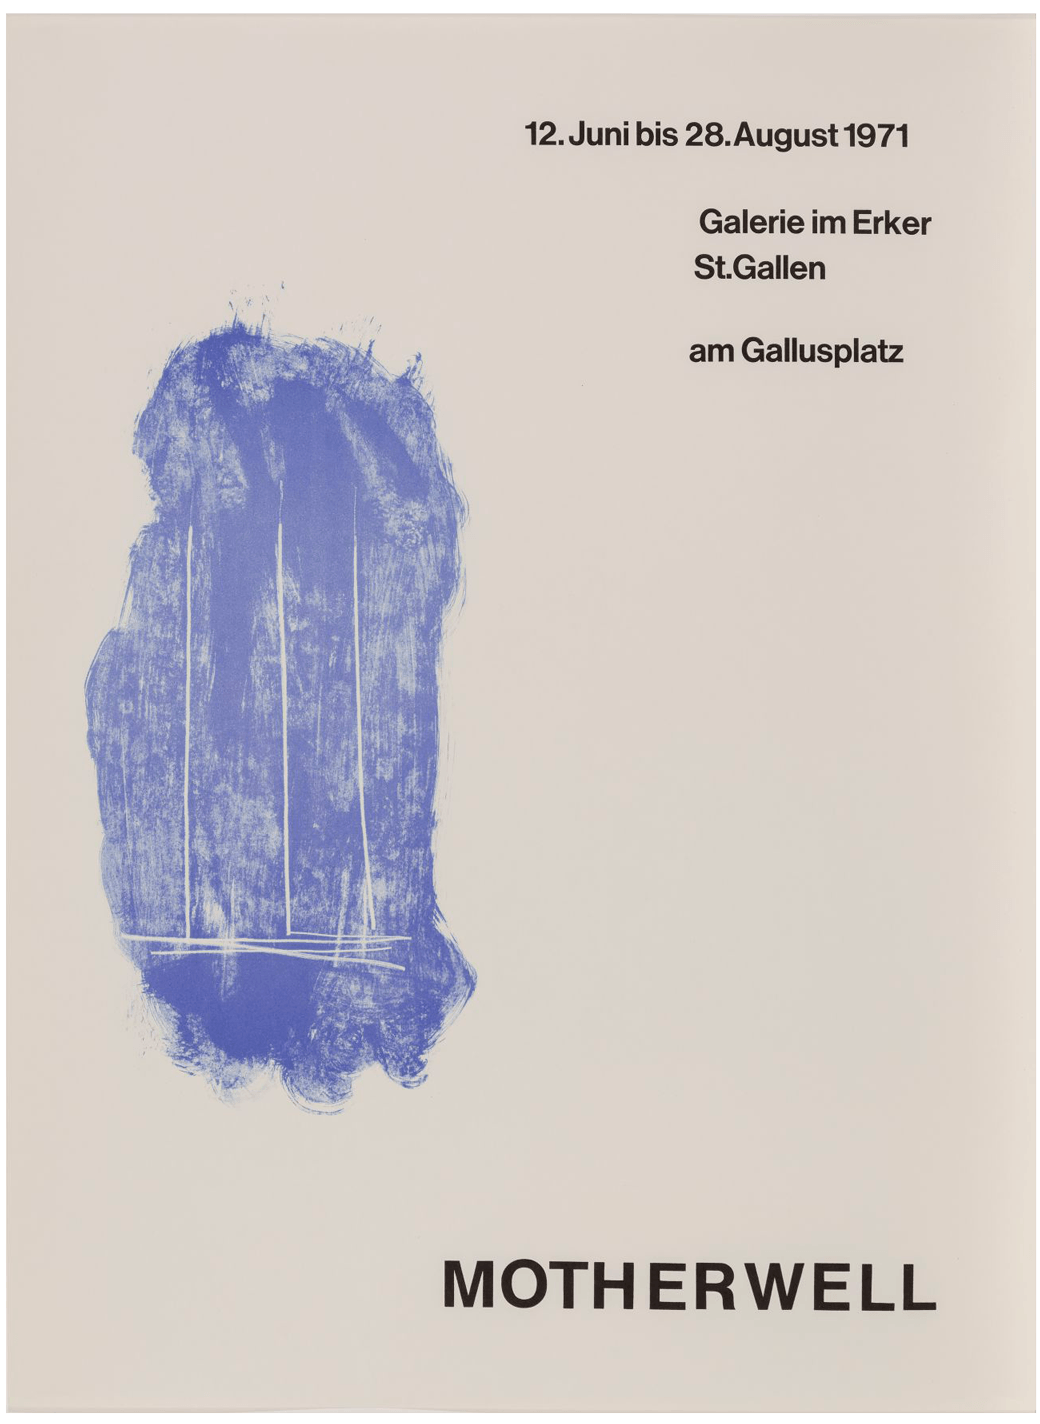 Exhibition poster for Robert Motherwell: Bilder und Collagen, 1967–1970, 1971. Features a work by Motherwell in blue on a white background.